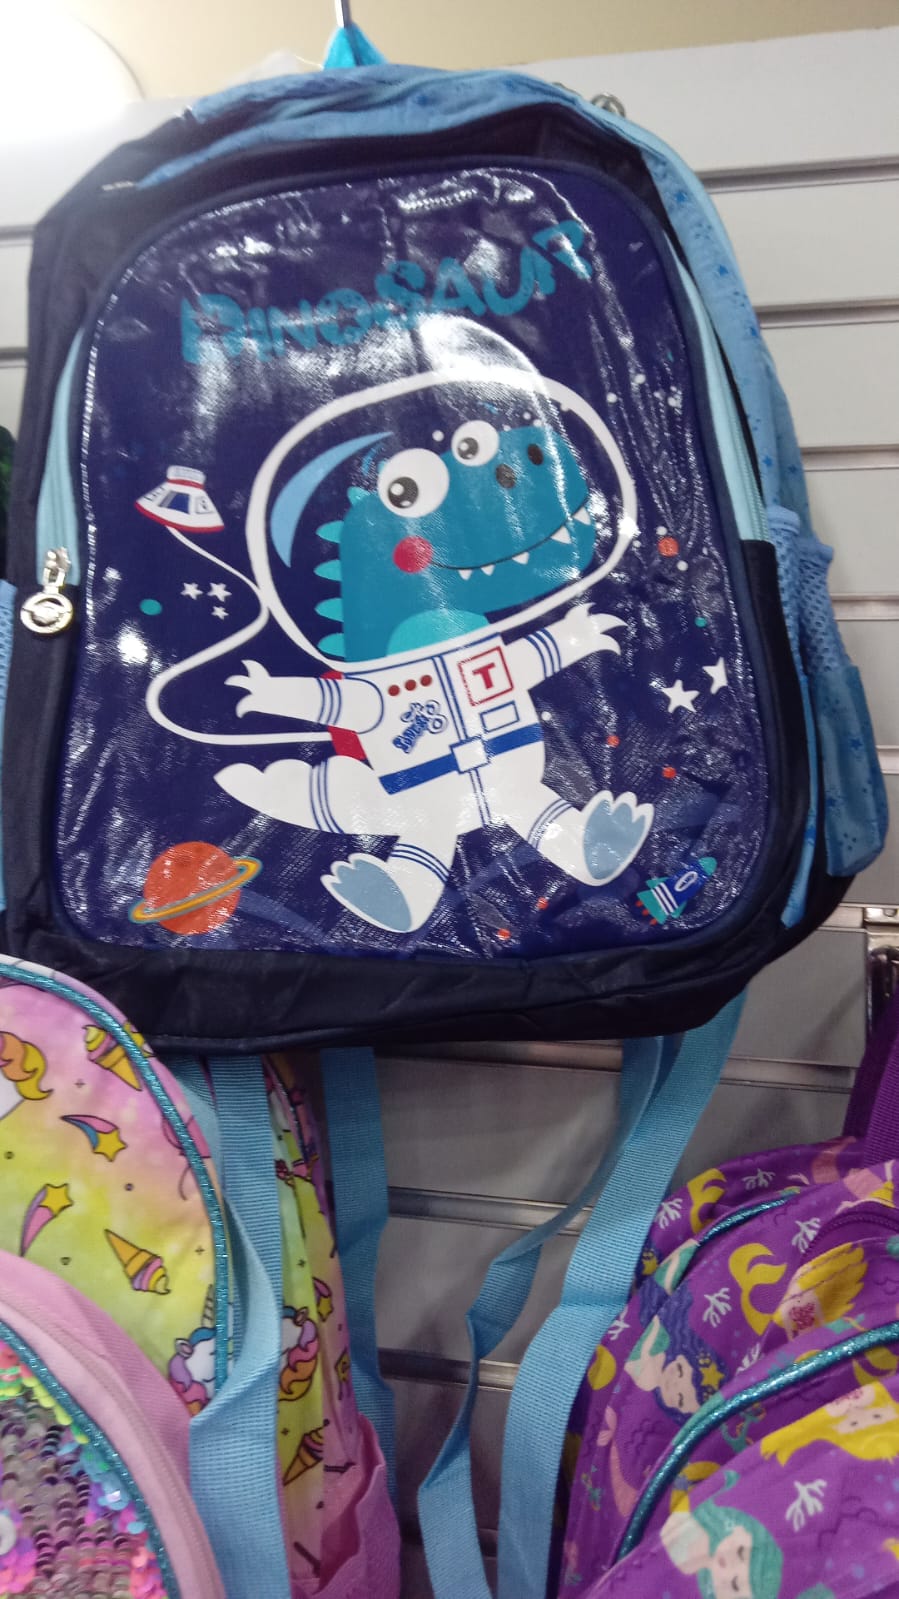 Space Dinosaur Bookbag (Preschool ,1st year